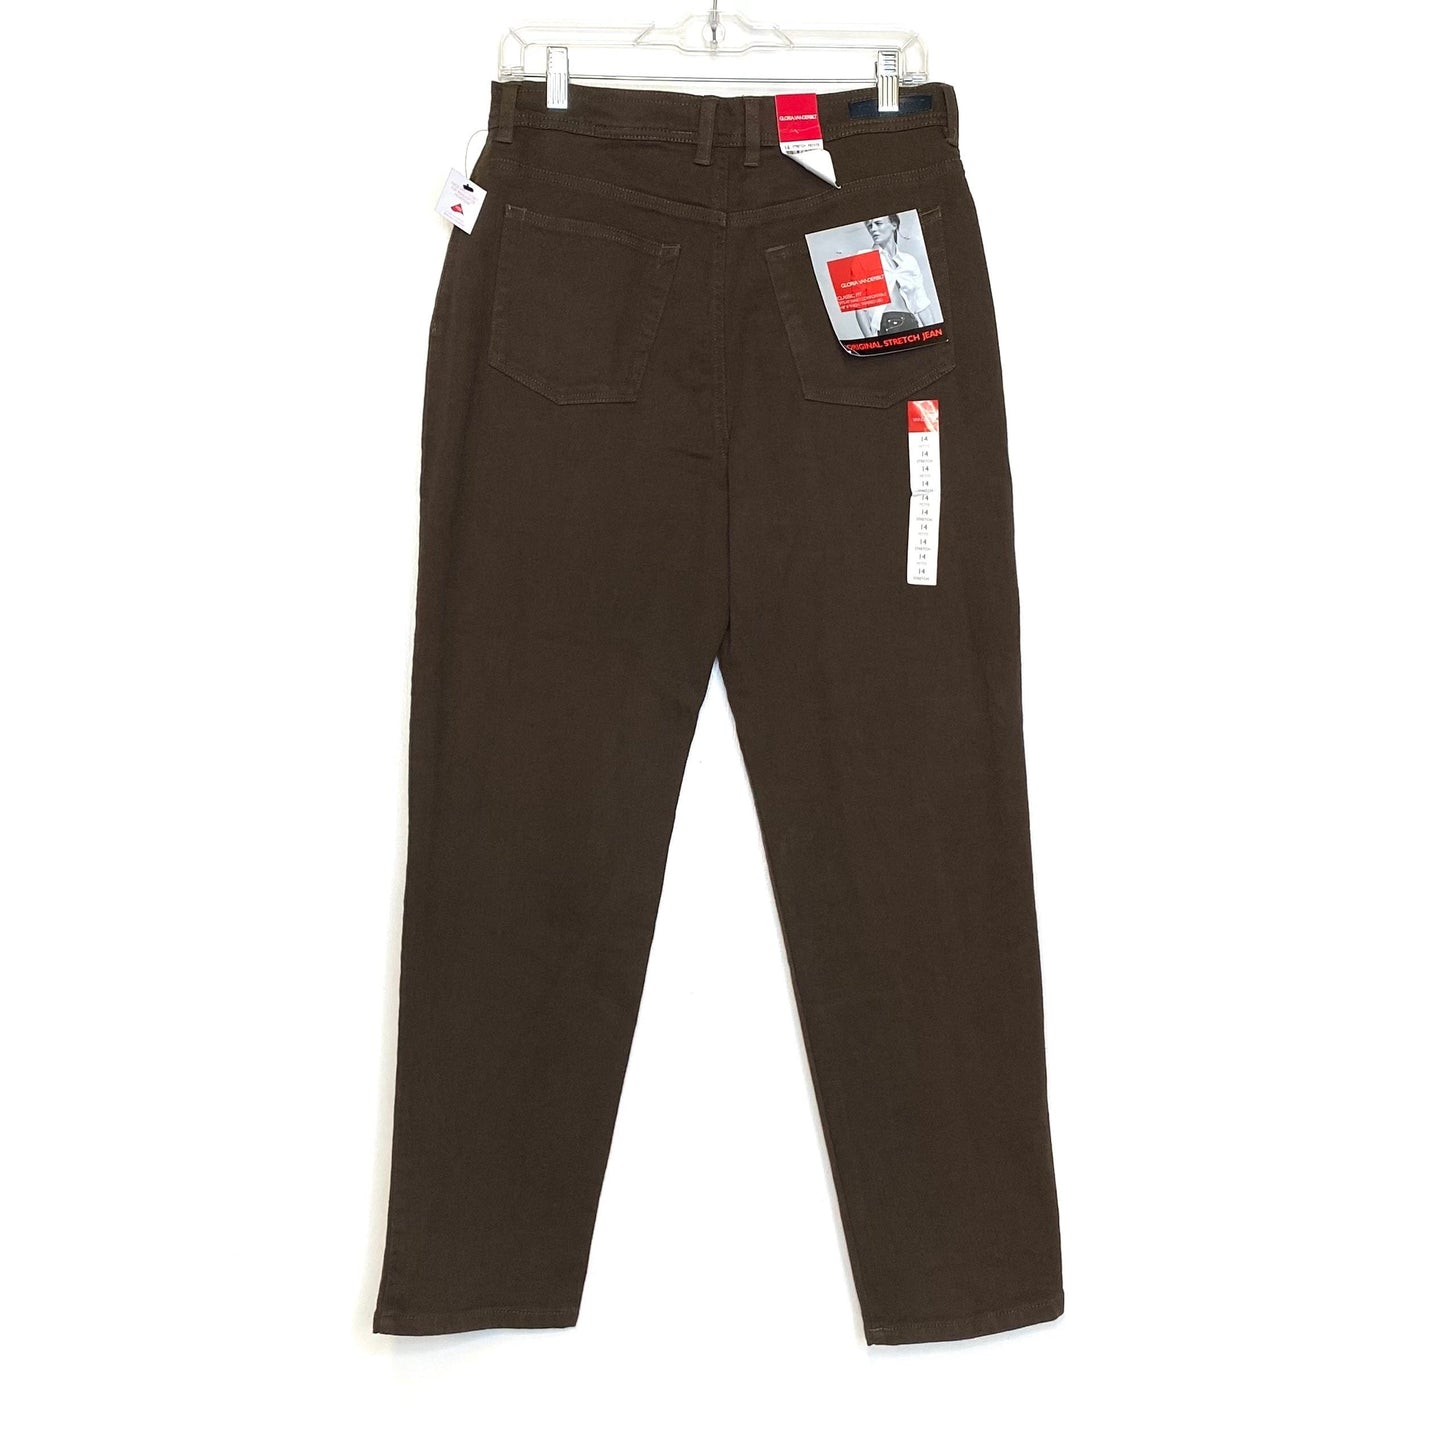 Gloria Vanderbilt Womens Size 14 Petites Birch Brown Stretch Denim Pants NWT